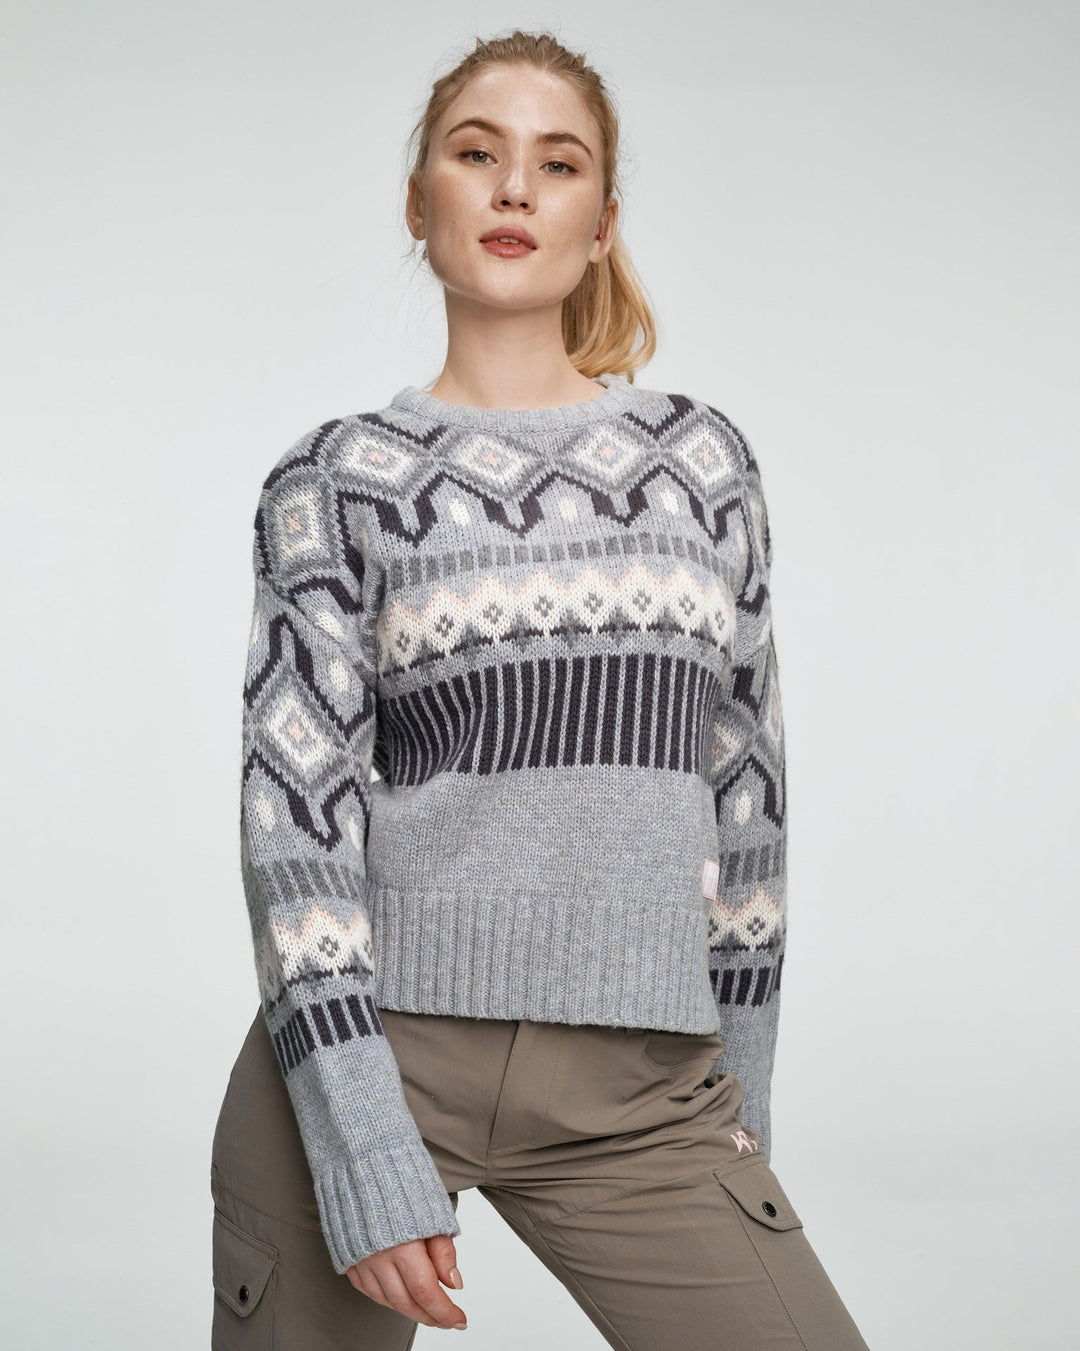 Kari Traa Mølster Knit Sweater Dame